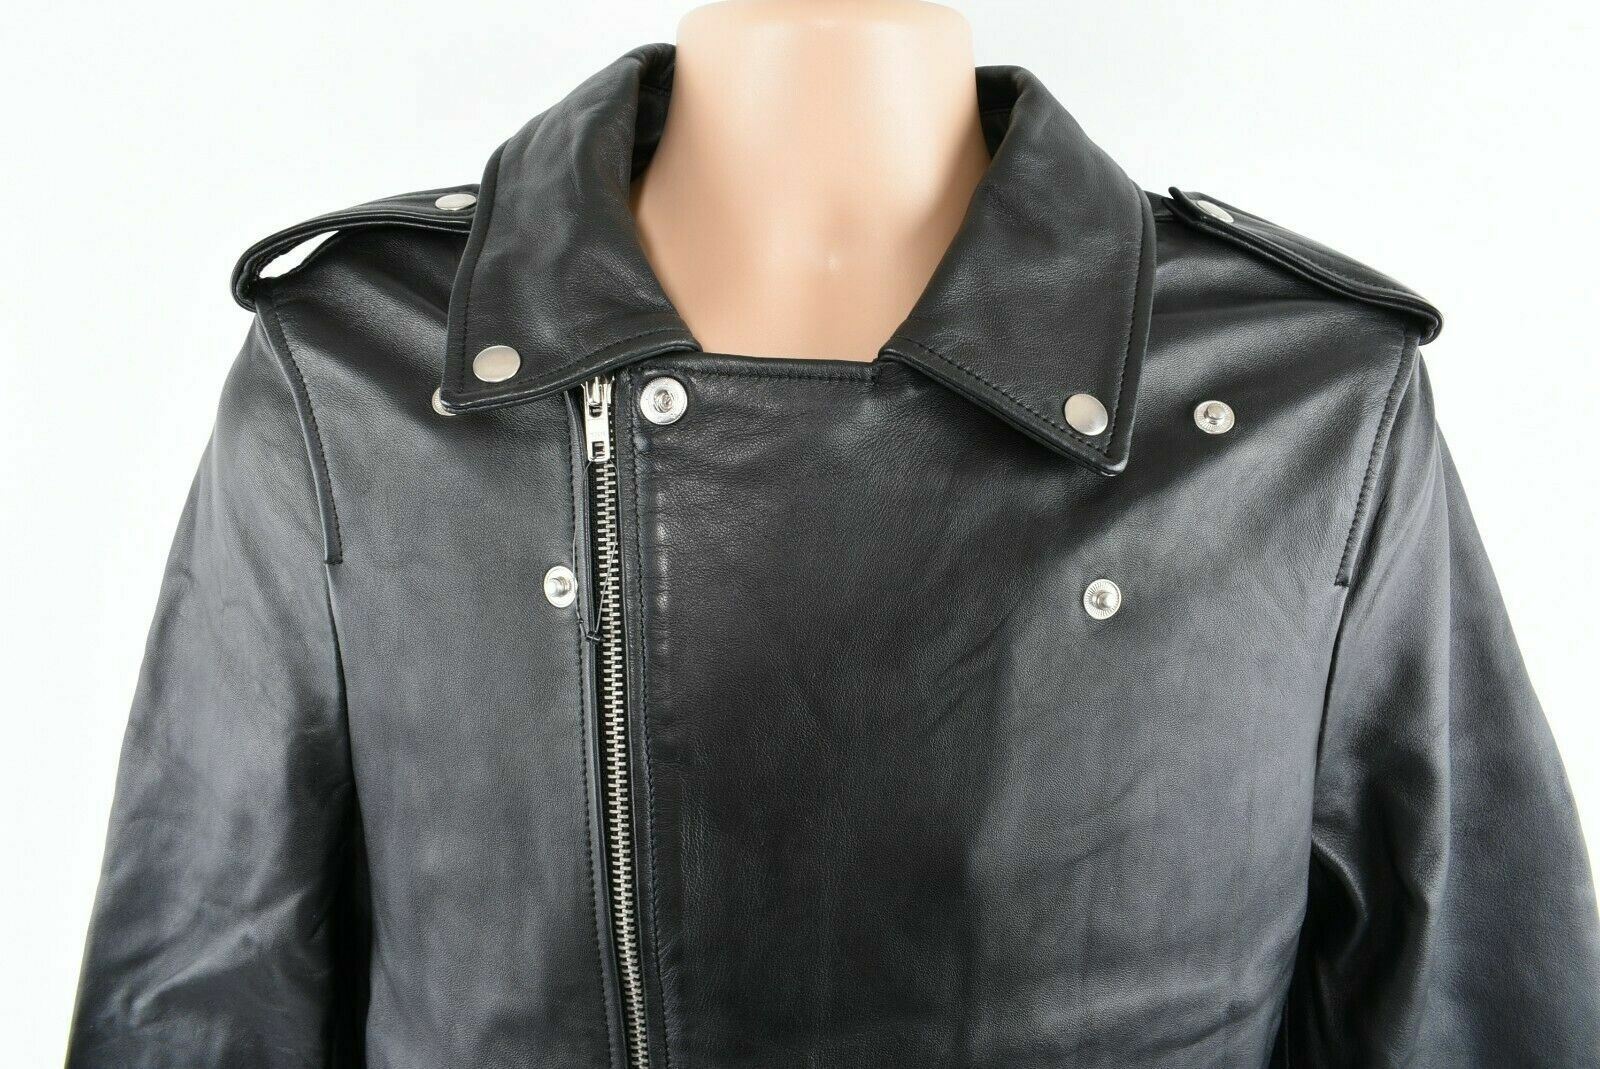 BOLONGARO TREVOR - Men's Genuine Sheepskin Leather Biker Jacket, Black, size M